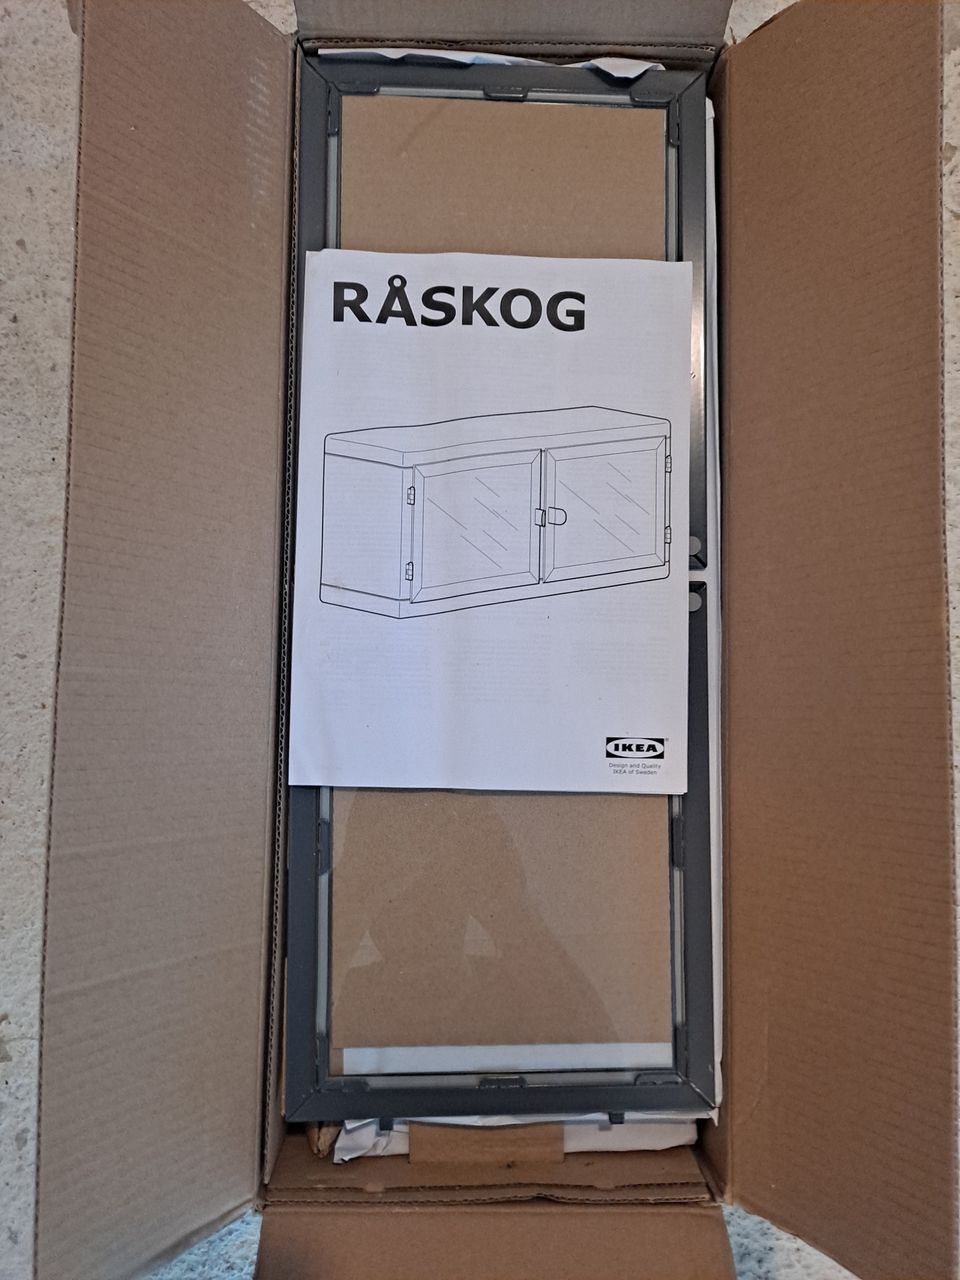 Ikea råskog